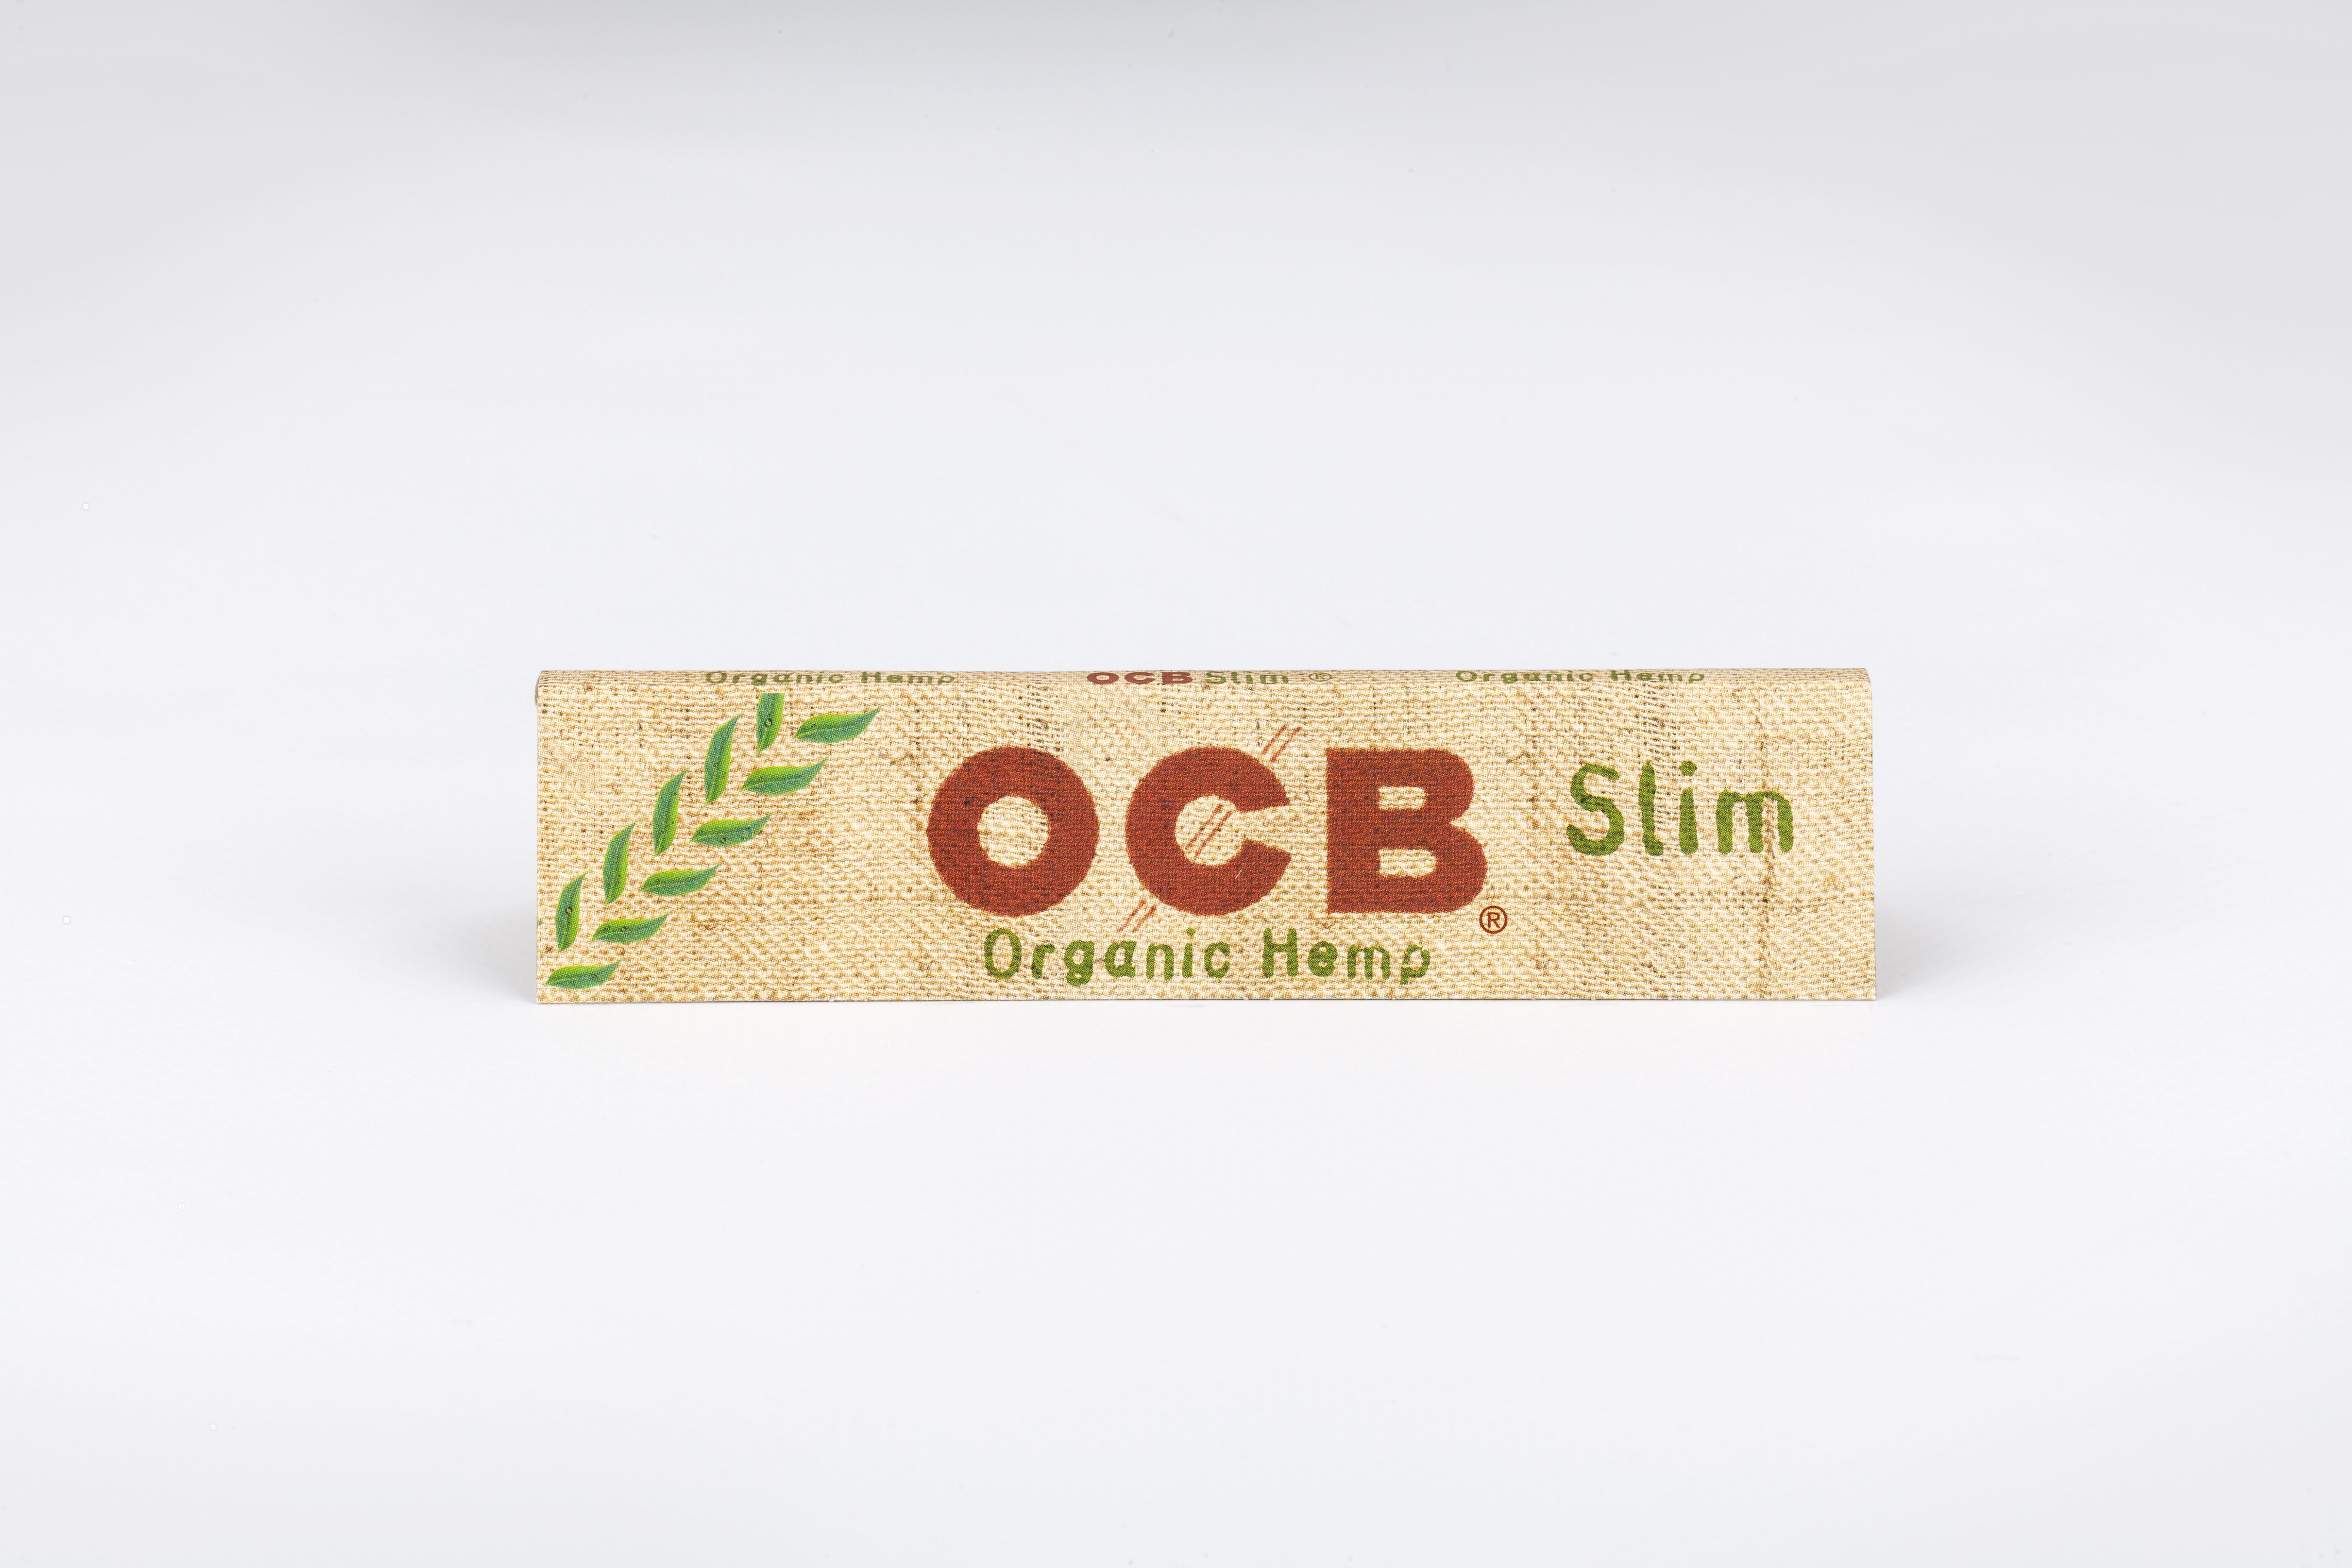 OCB Organic Ljusbruna